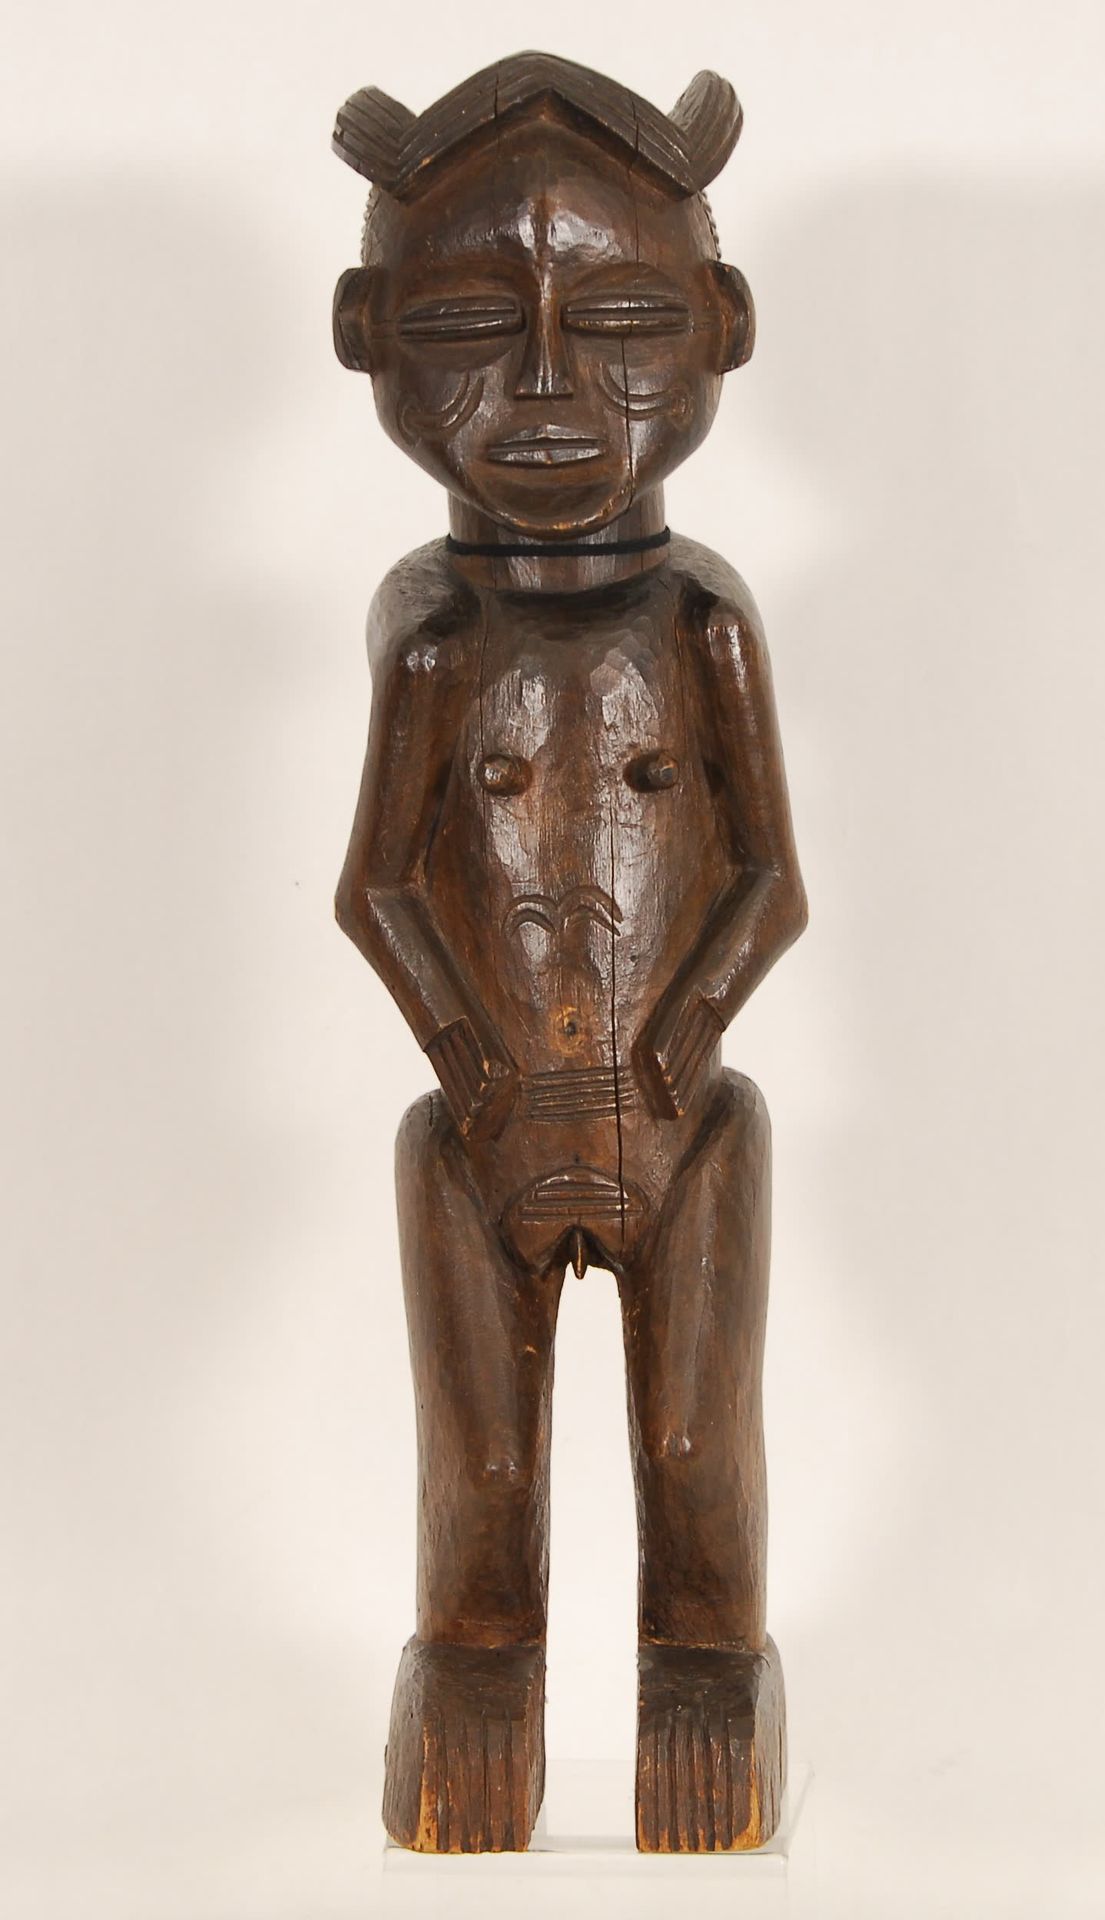 Afrique - Africa Statue
Sculpted wood, Angola.
H. 48 cm.